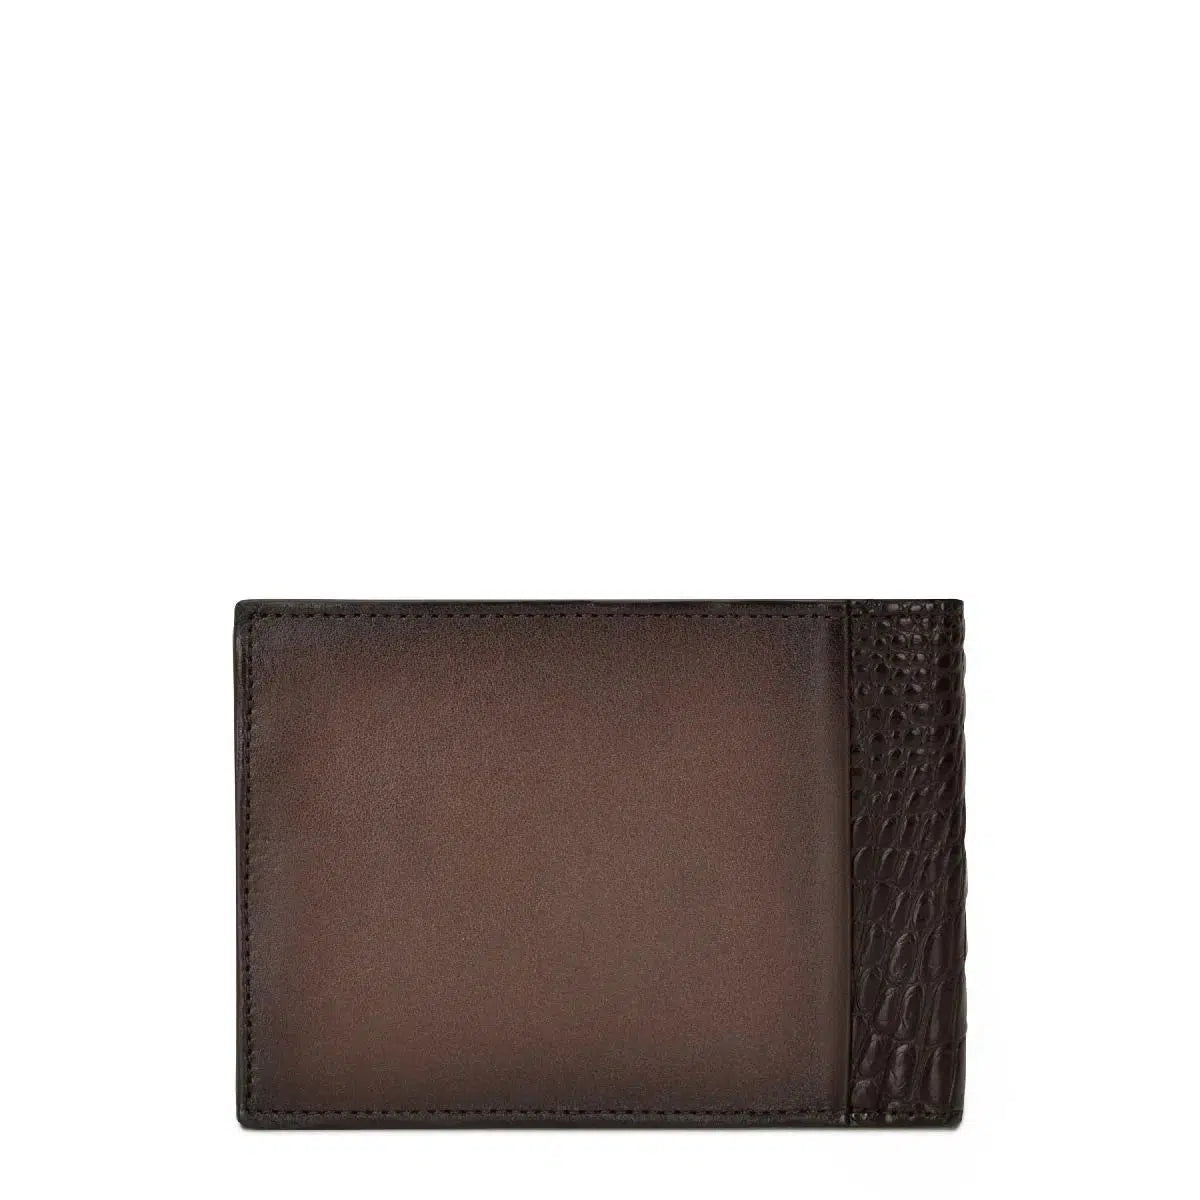 BC003NL - Cuadra brown classic niloticus exotic bifold wallet for men.-CUADRA-Kuet-Cuadra-Boots